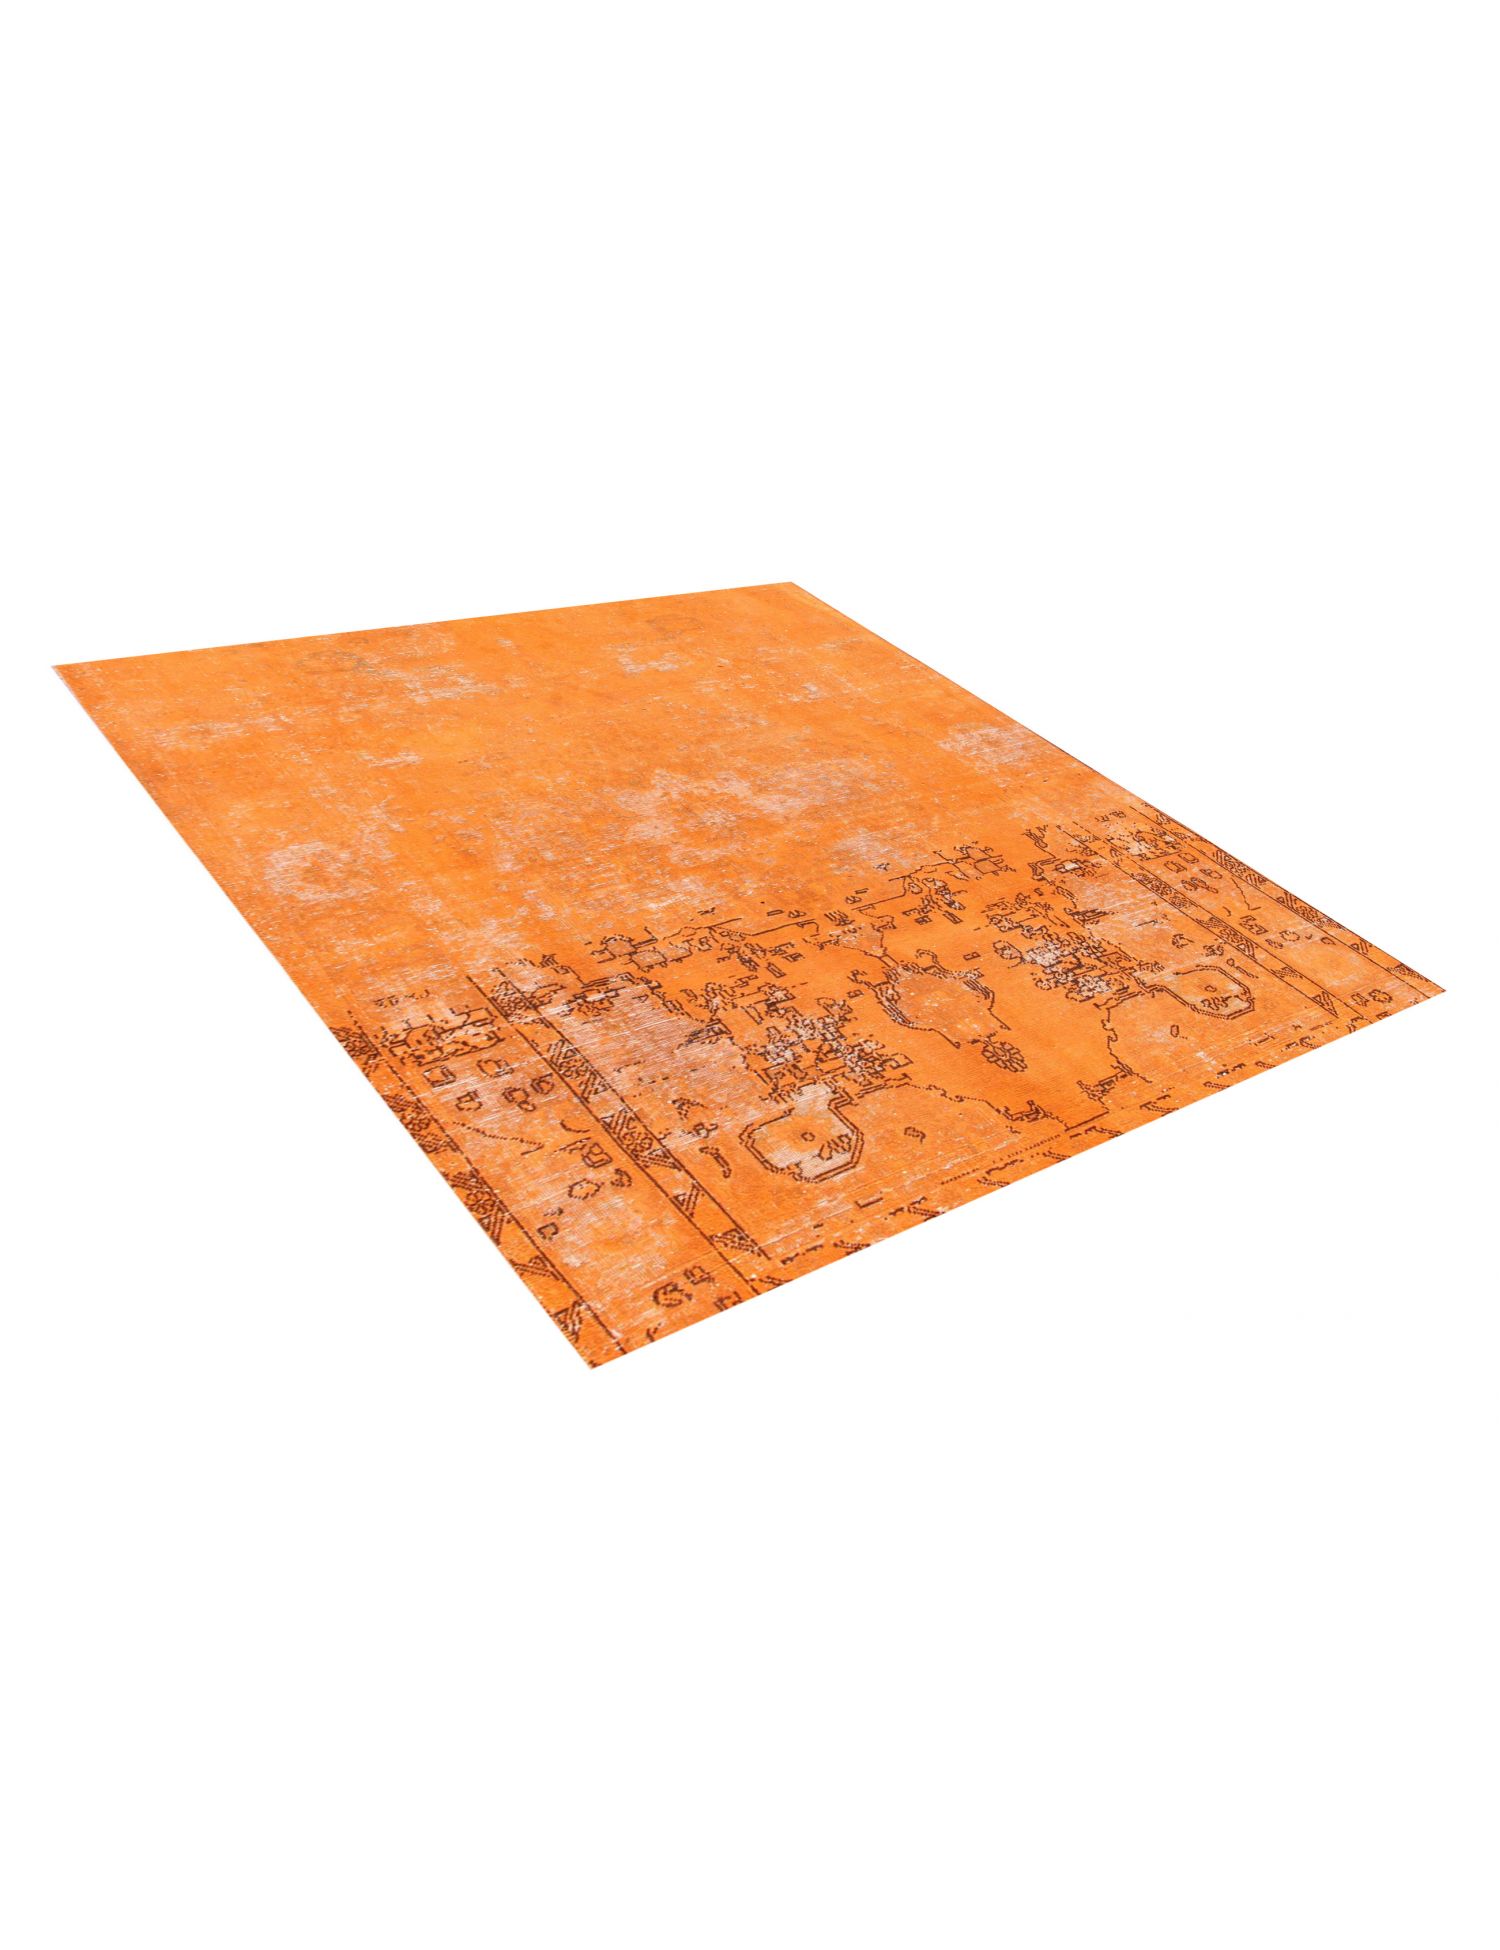 Quadrat  Vintage Teppich  orange <br/>194 x 194 cm